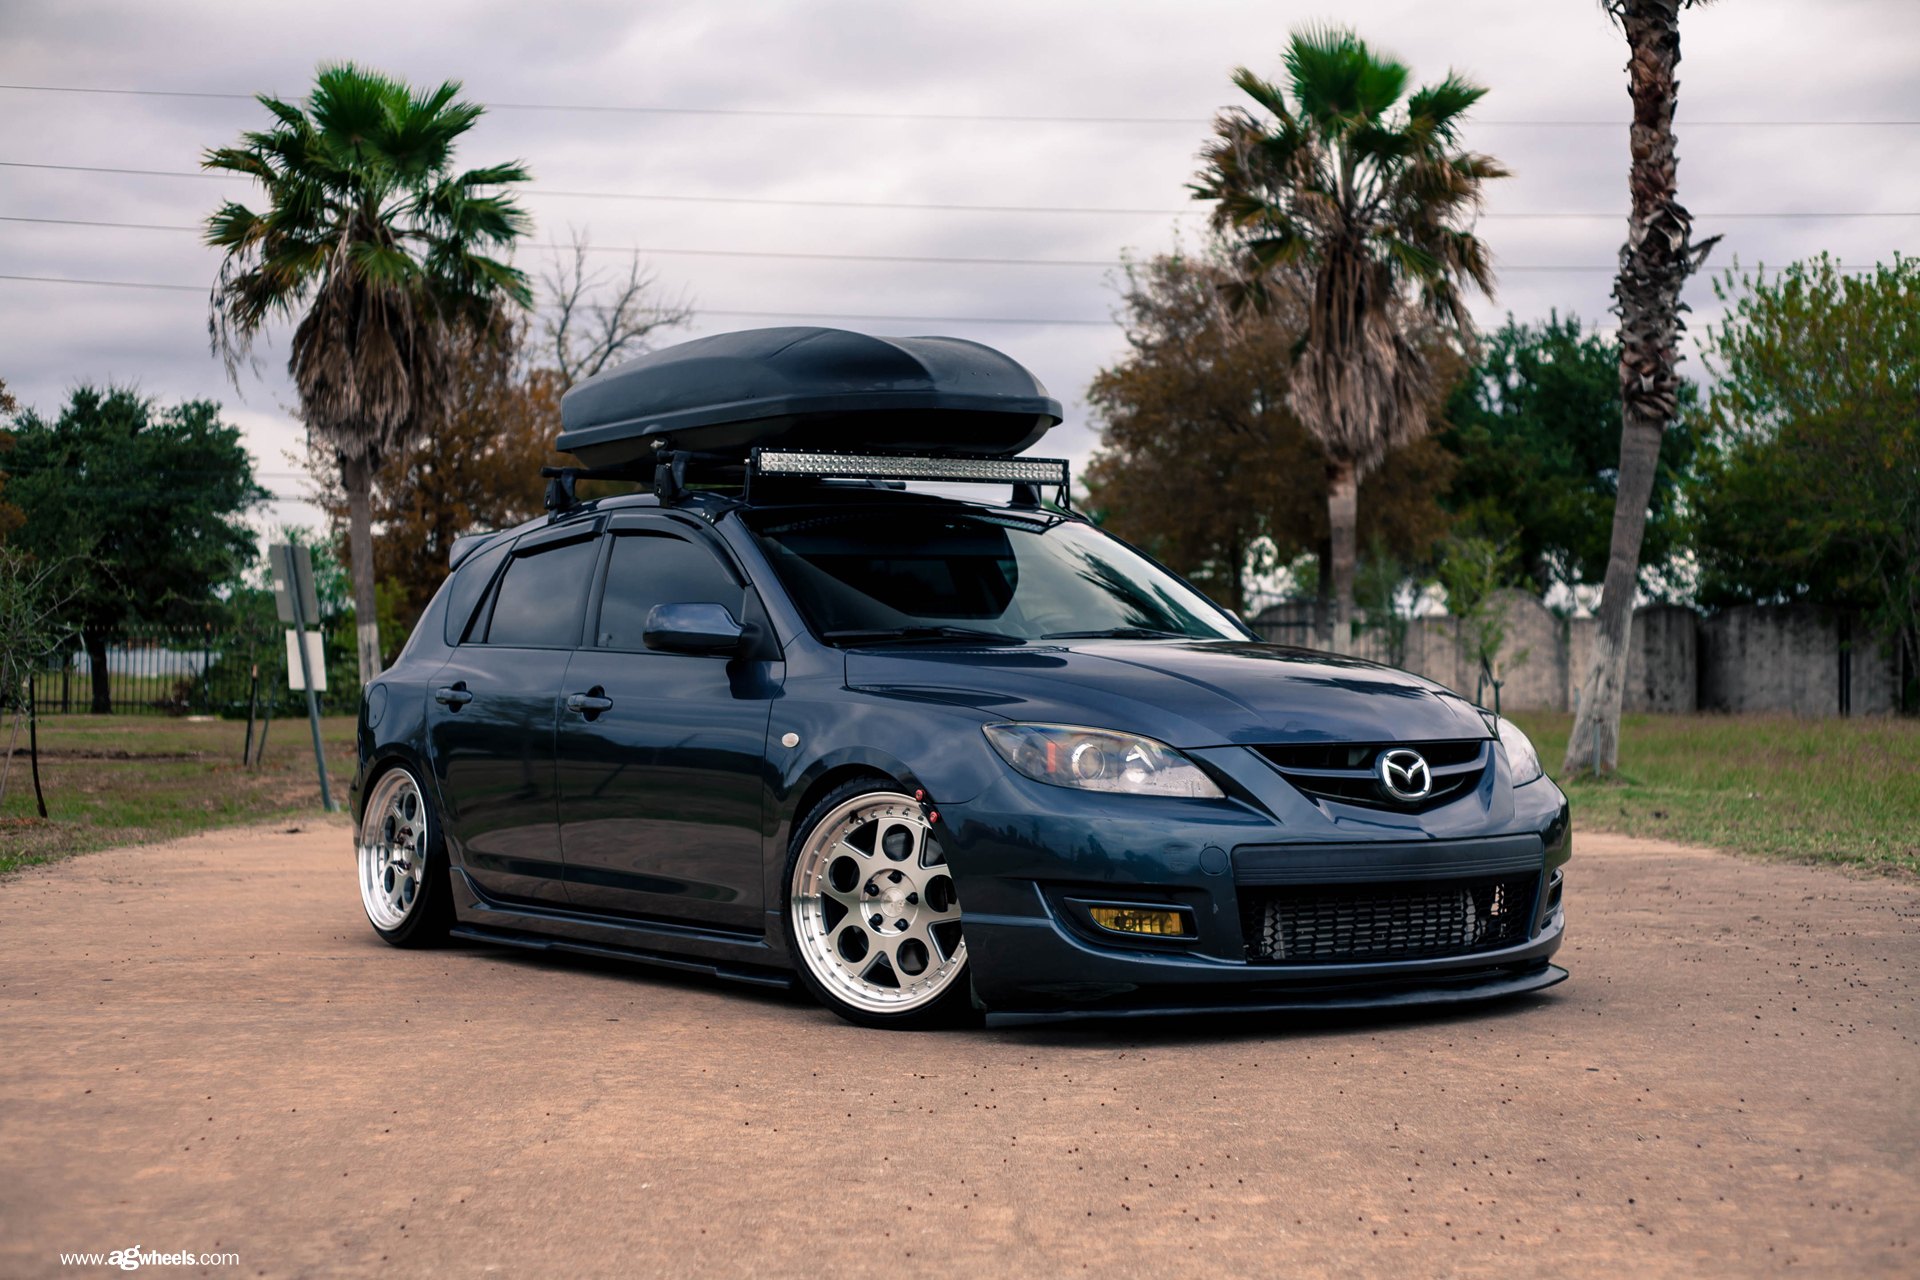 Custom Black Mazda 3 with Roof Rack - Photo by Avant Garde Wheels